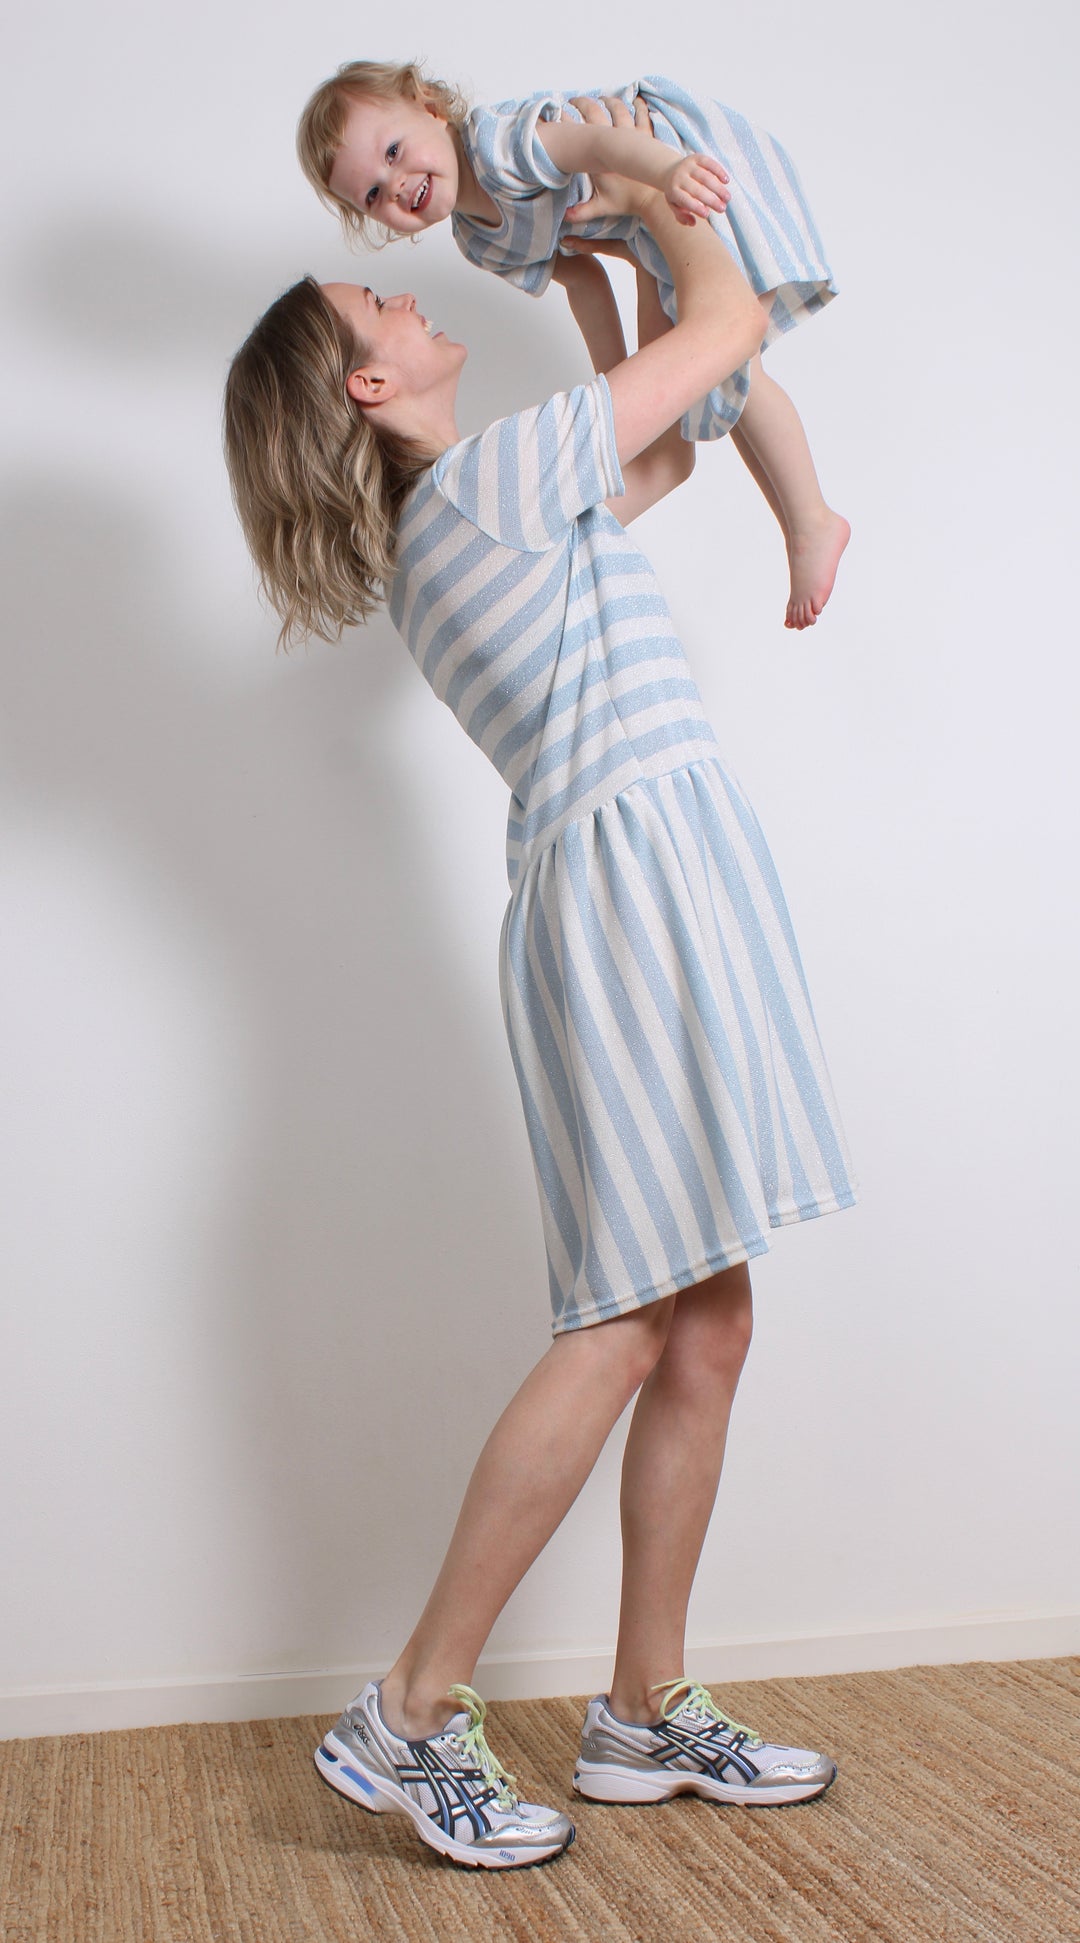 Laura Short Sleeve Dress, Blue Glitter Stripes